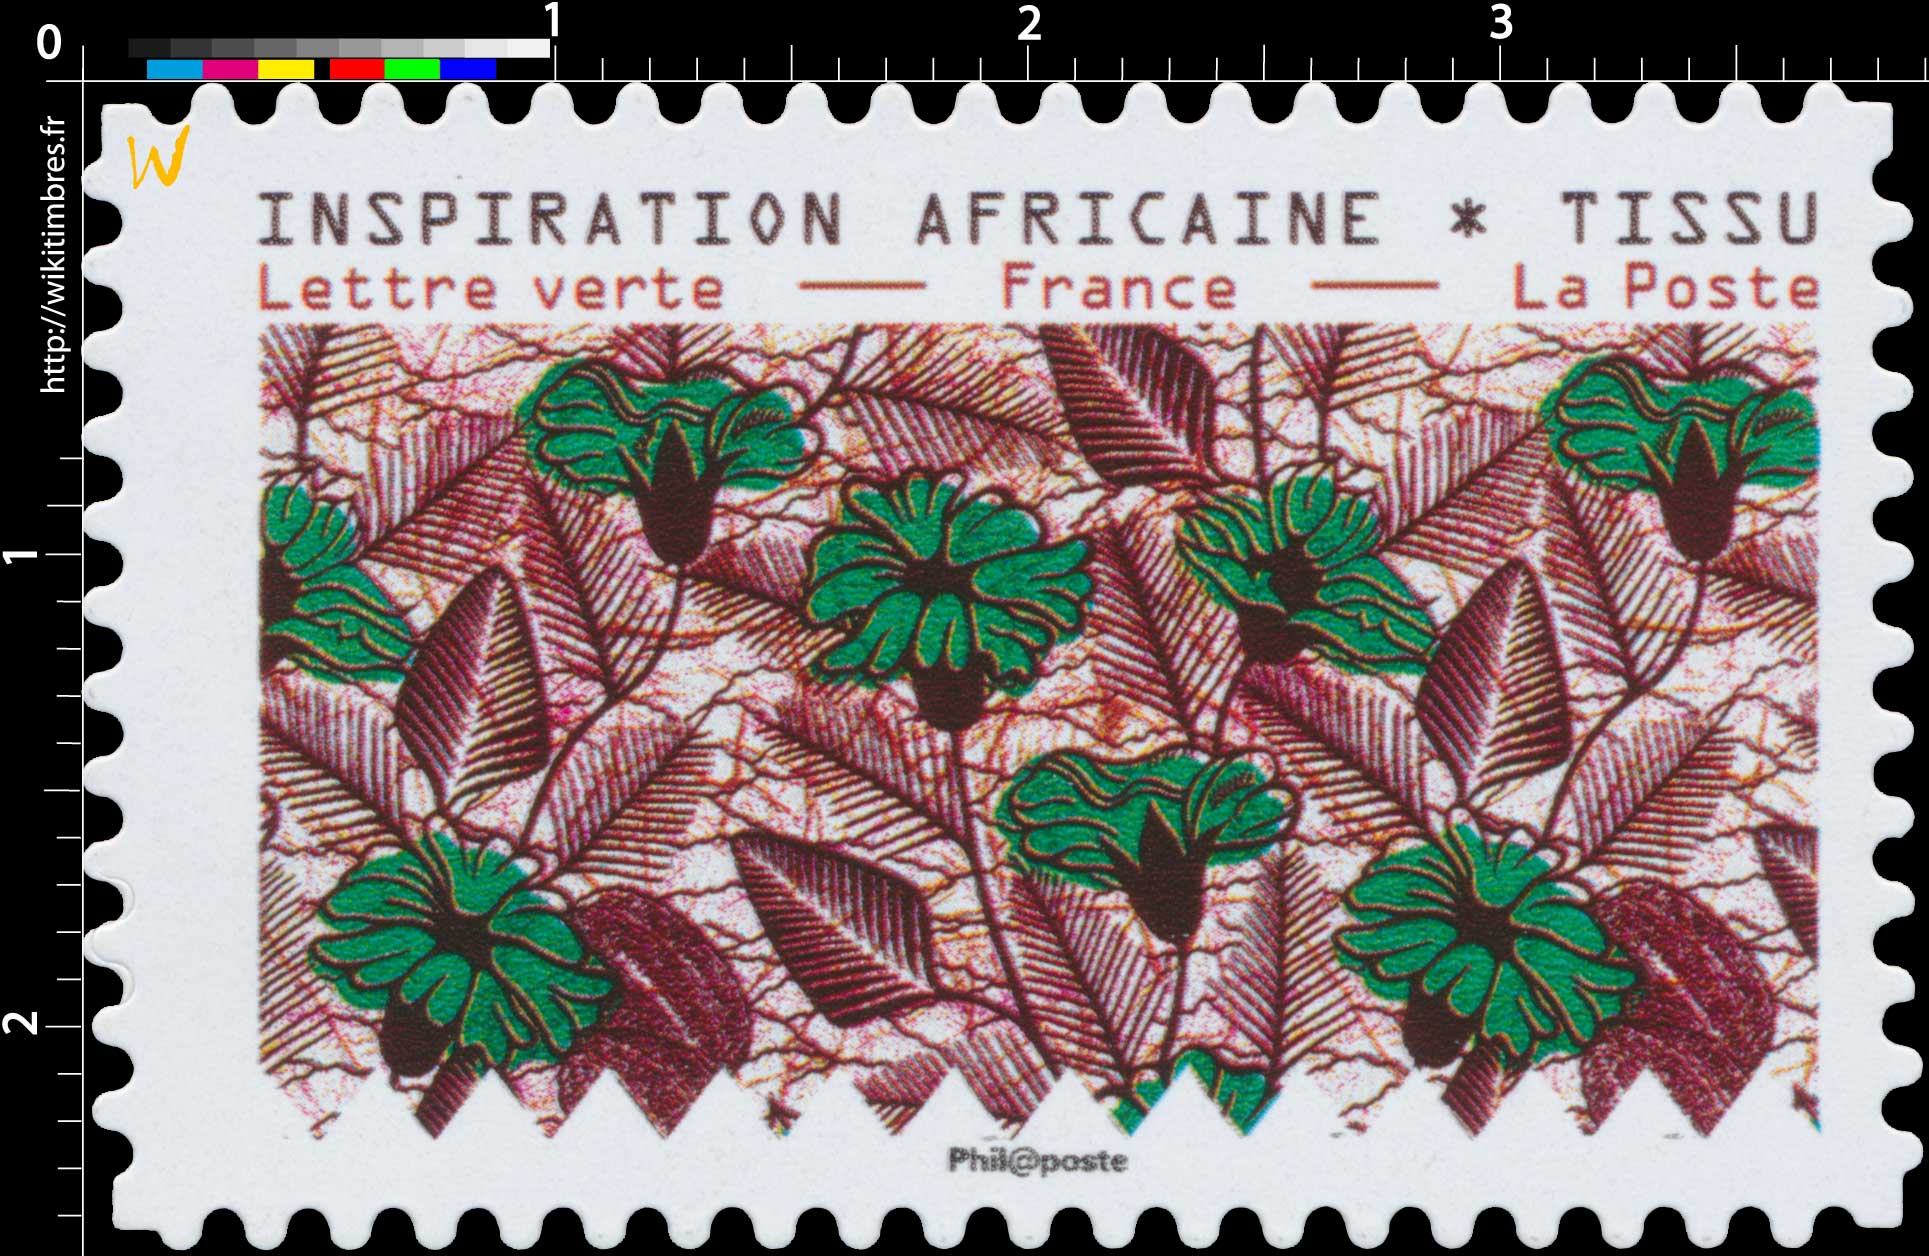 2019 Tissus motifs nature - INSPIRATION AFRICAINE